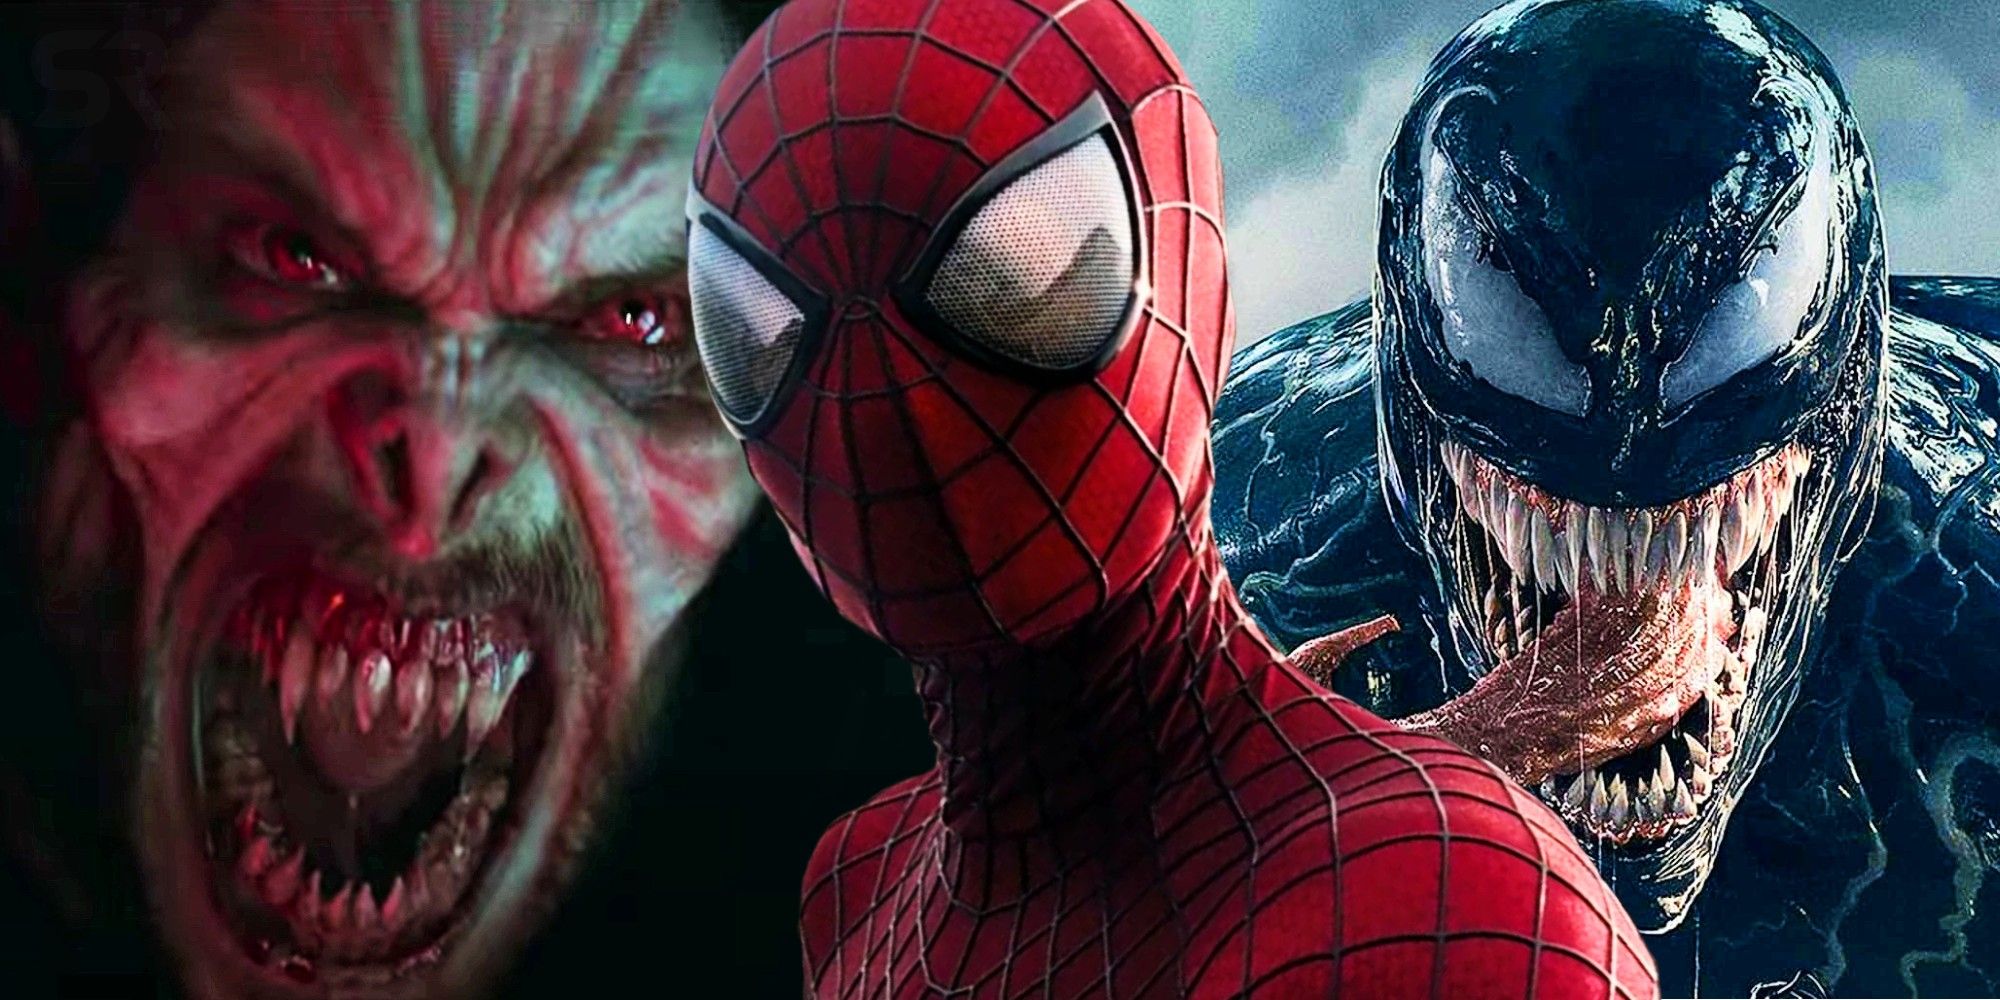 templado Marchitar retirada Amazing Spider-Man 2 Easter Eggs Reference Venom & Morbius